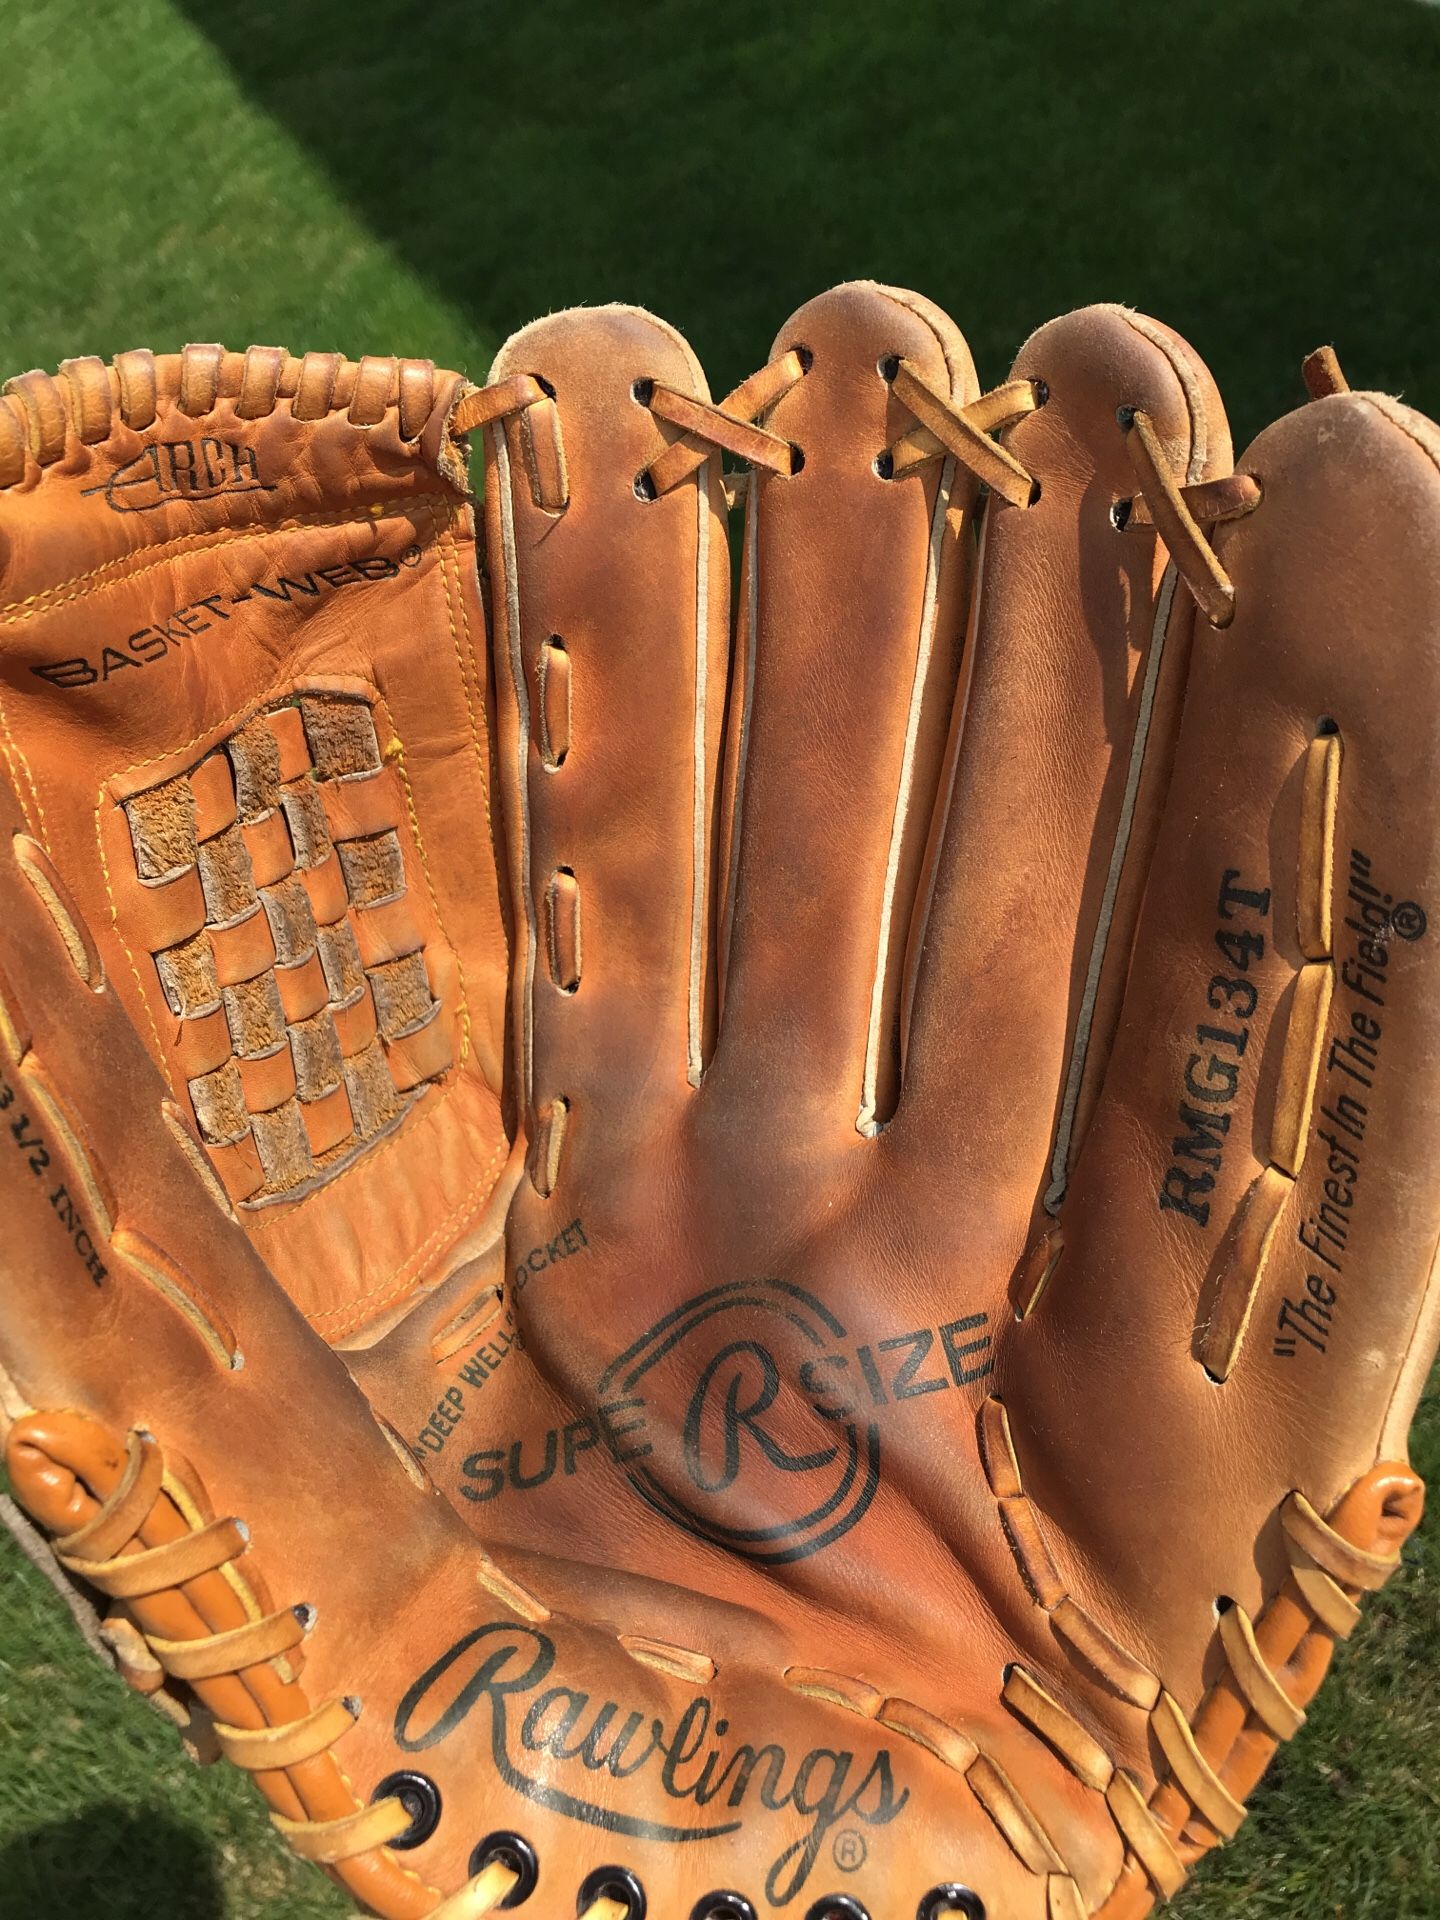 Rawlings Super size 13.5 inch slowpitch softball Glove / mitt